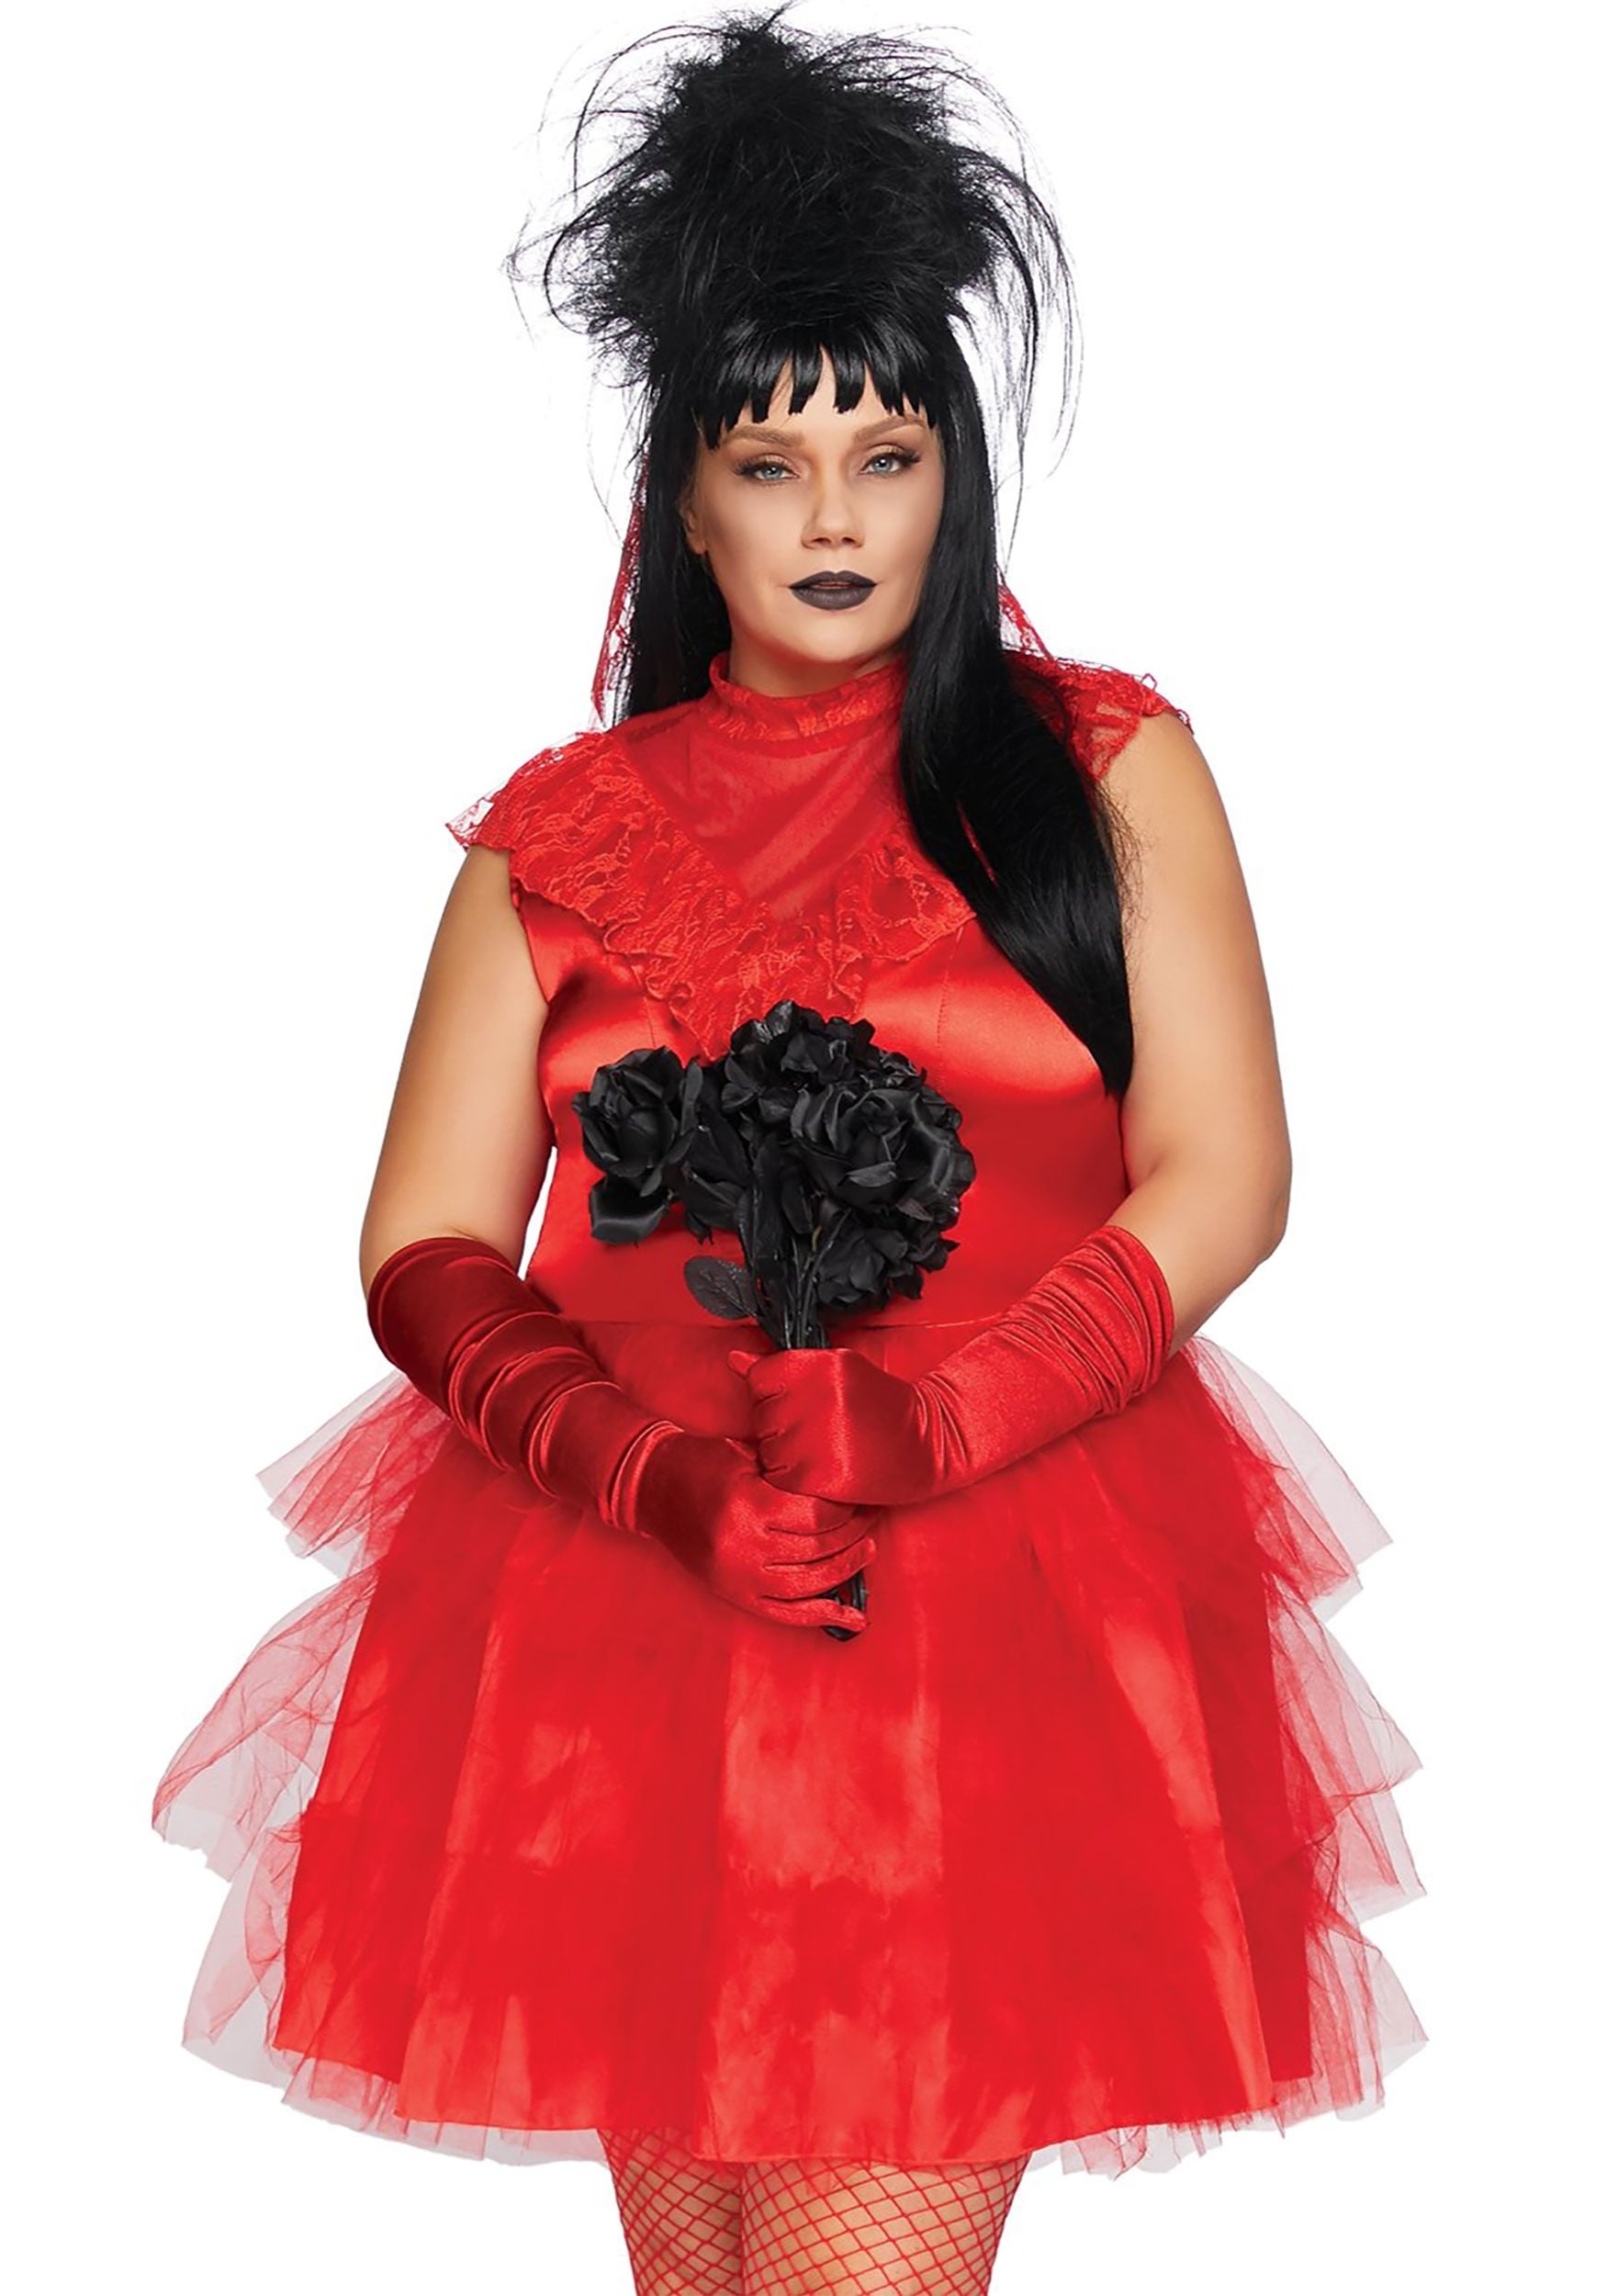 13 Curvy Costumes ideas  plus size costume, costumes for women, plus size  halloween costume